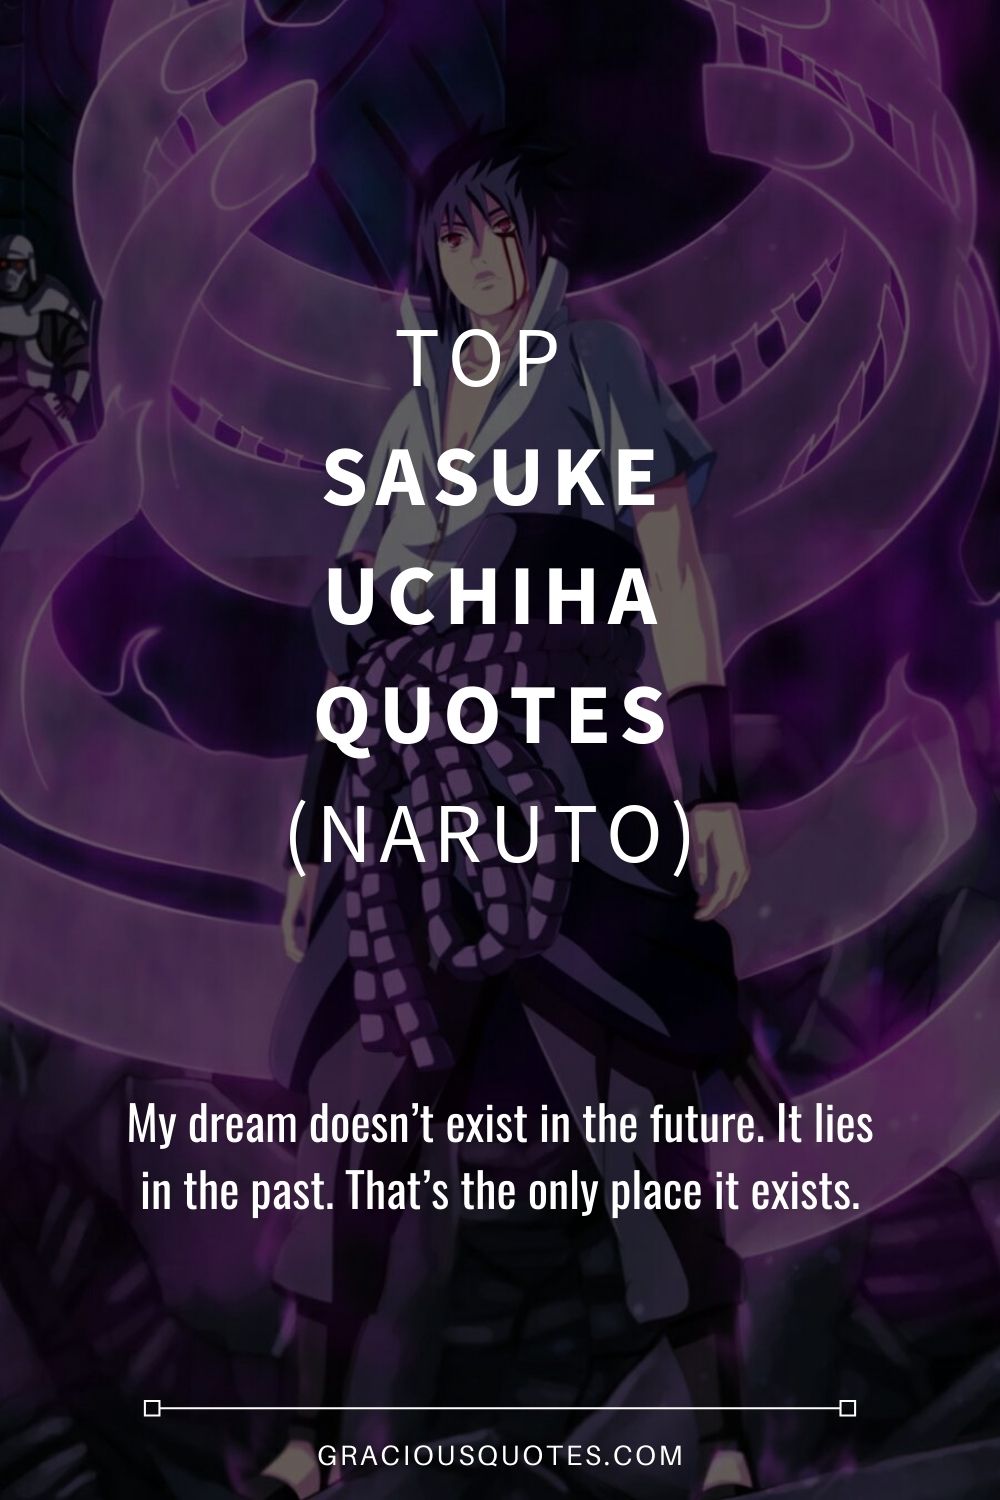 Top Sasuke Uchiha Quotes (NARUTO) - Gracious Quotes